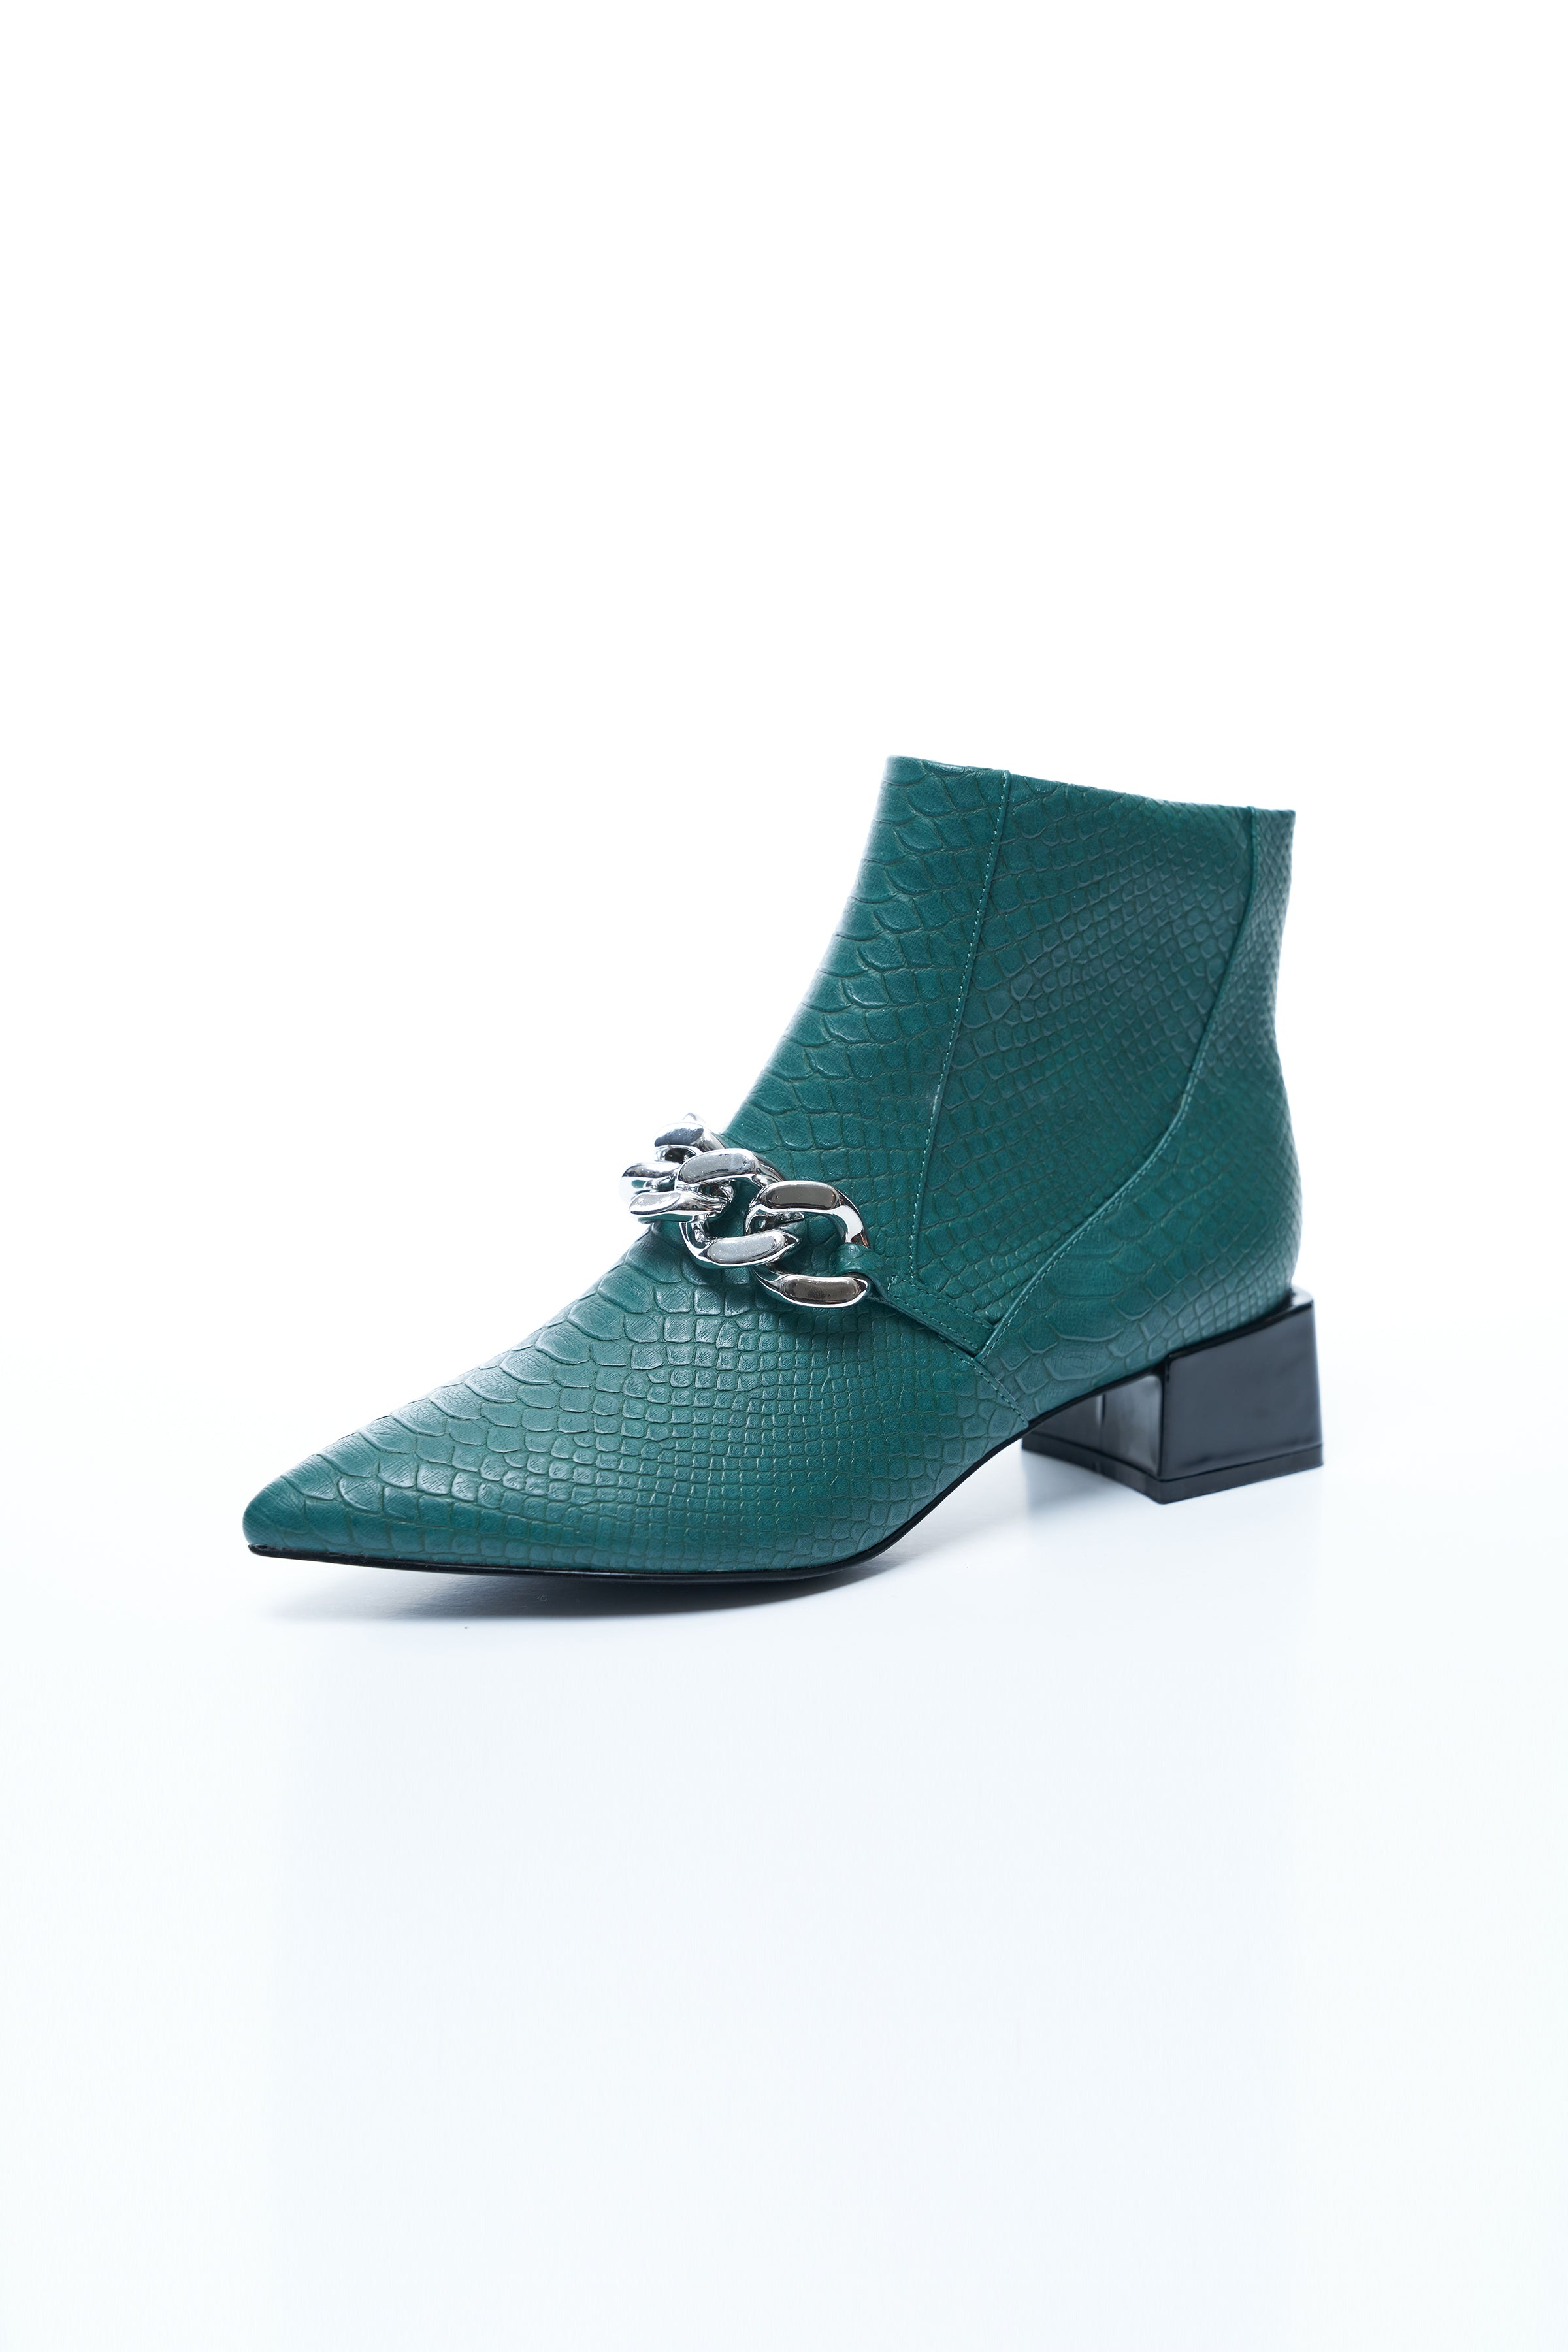 croc leather heels